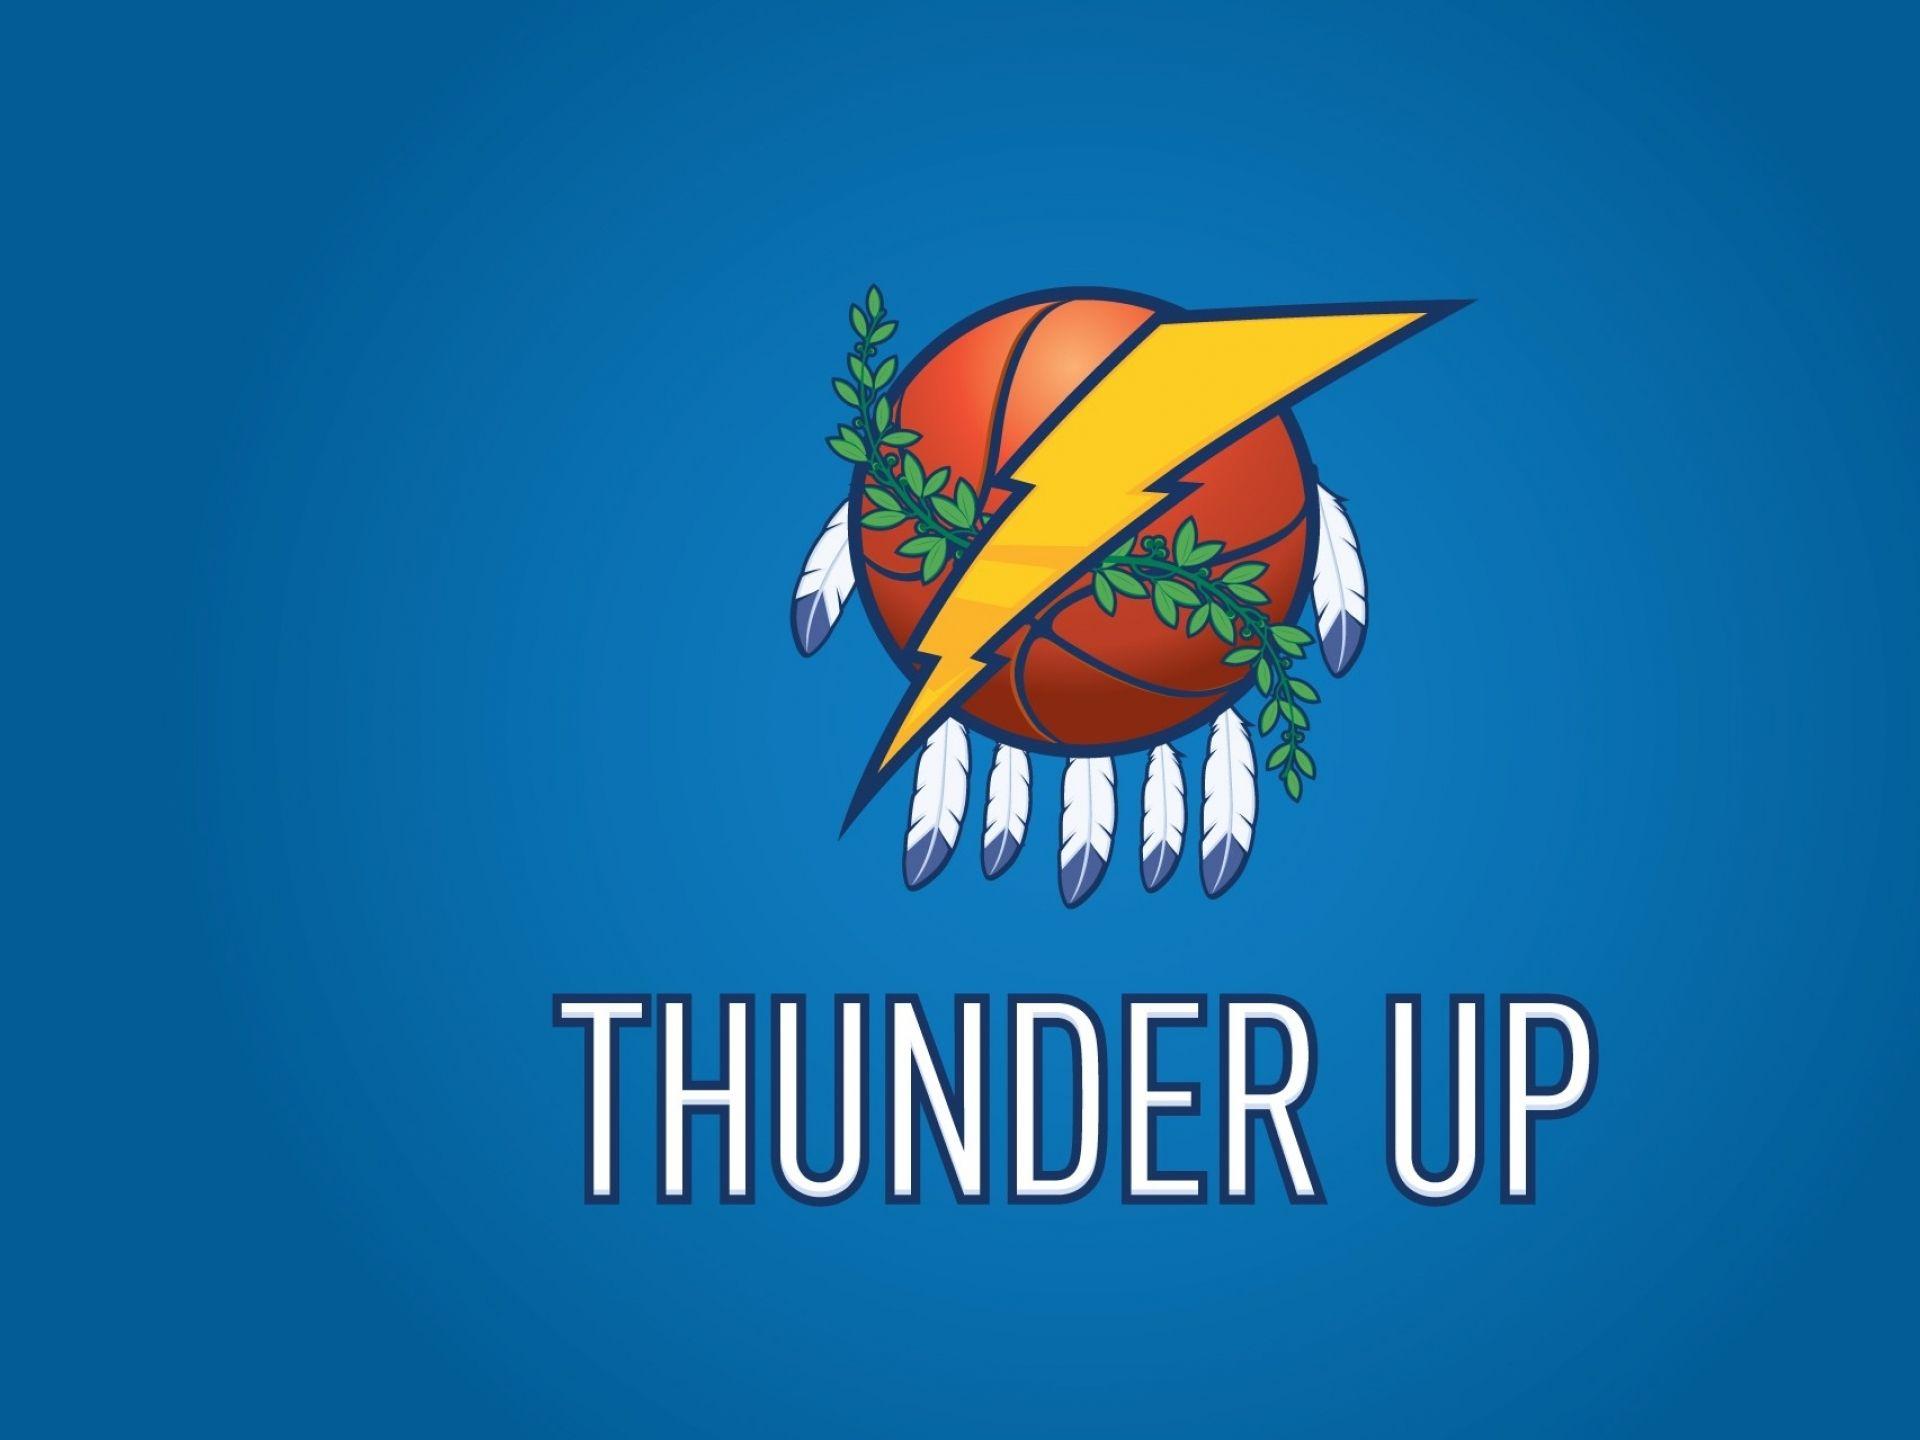 Wallpaper.wiki Oklahoma City Thunder Basketball Club Wallpaper 3